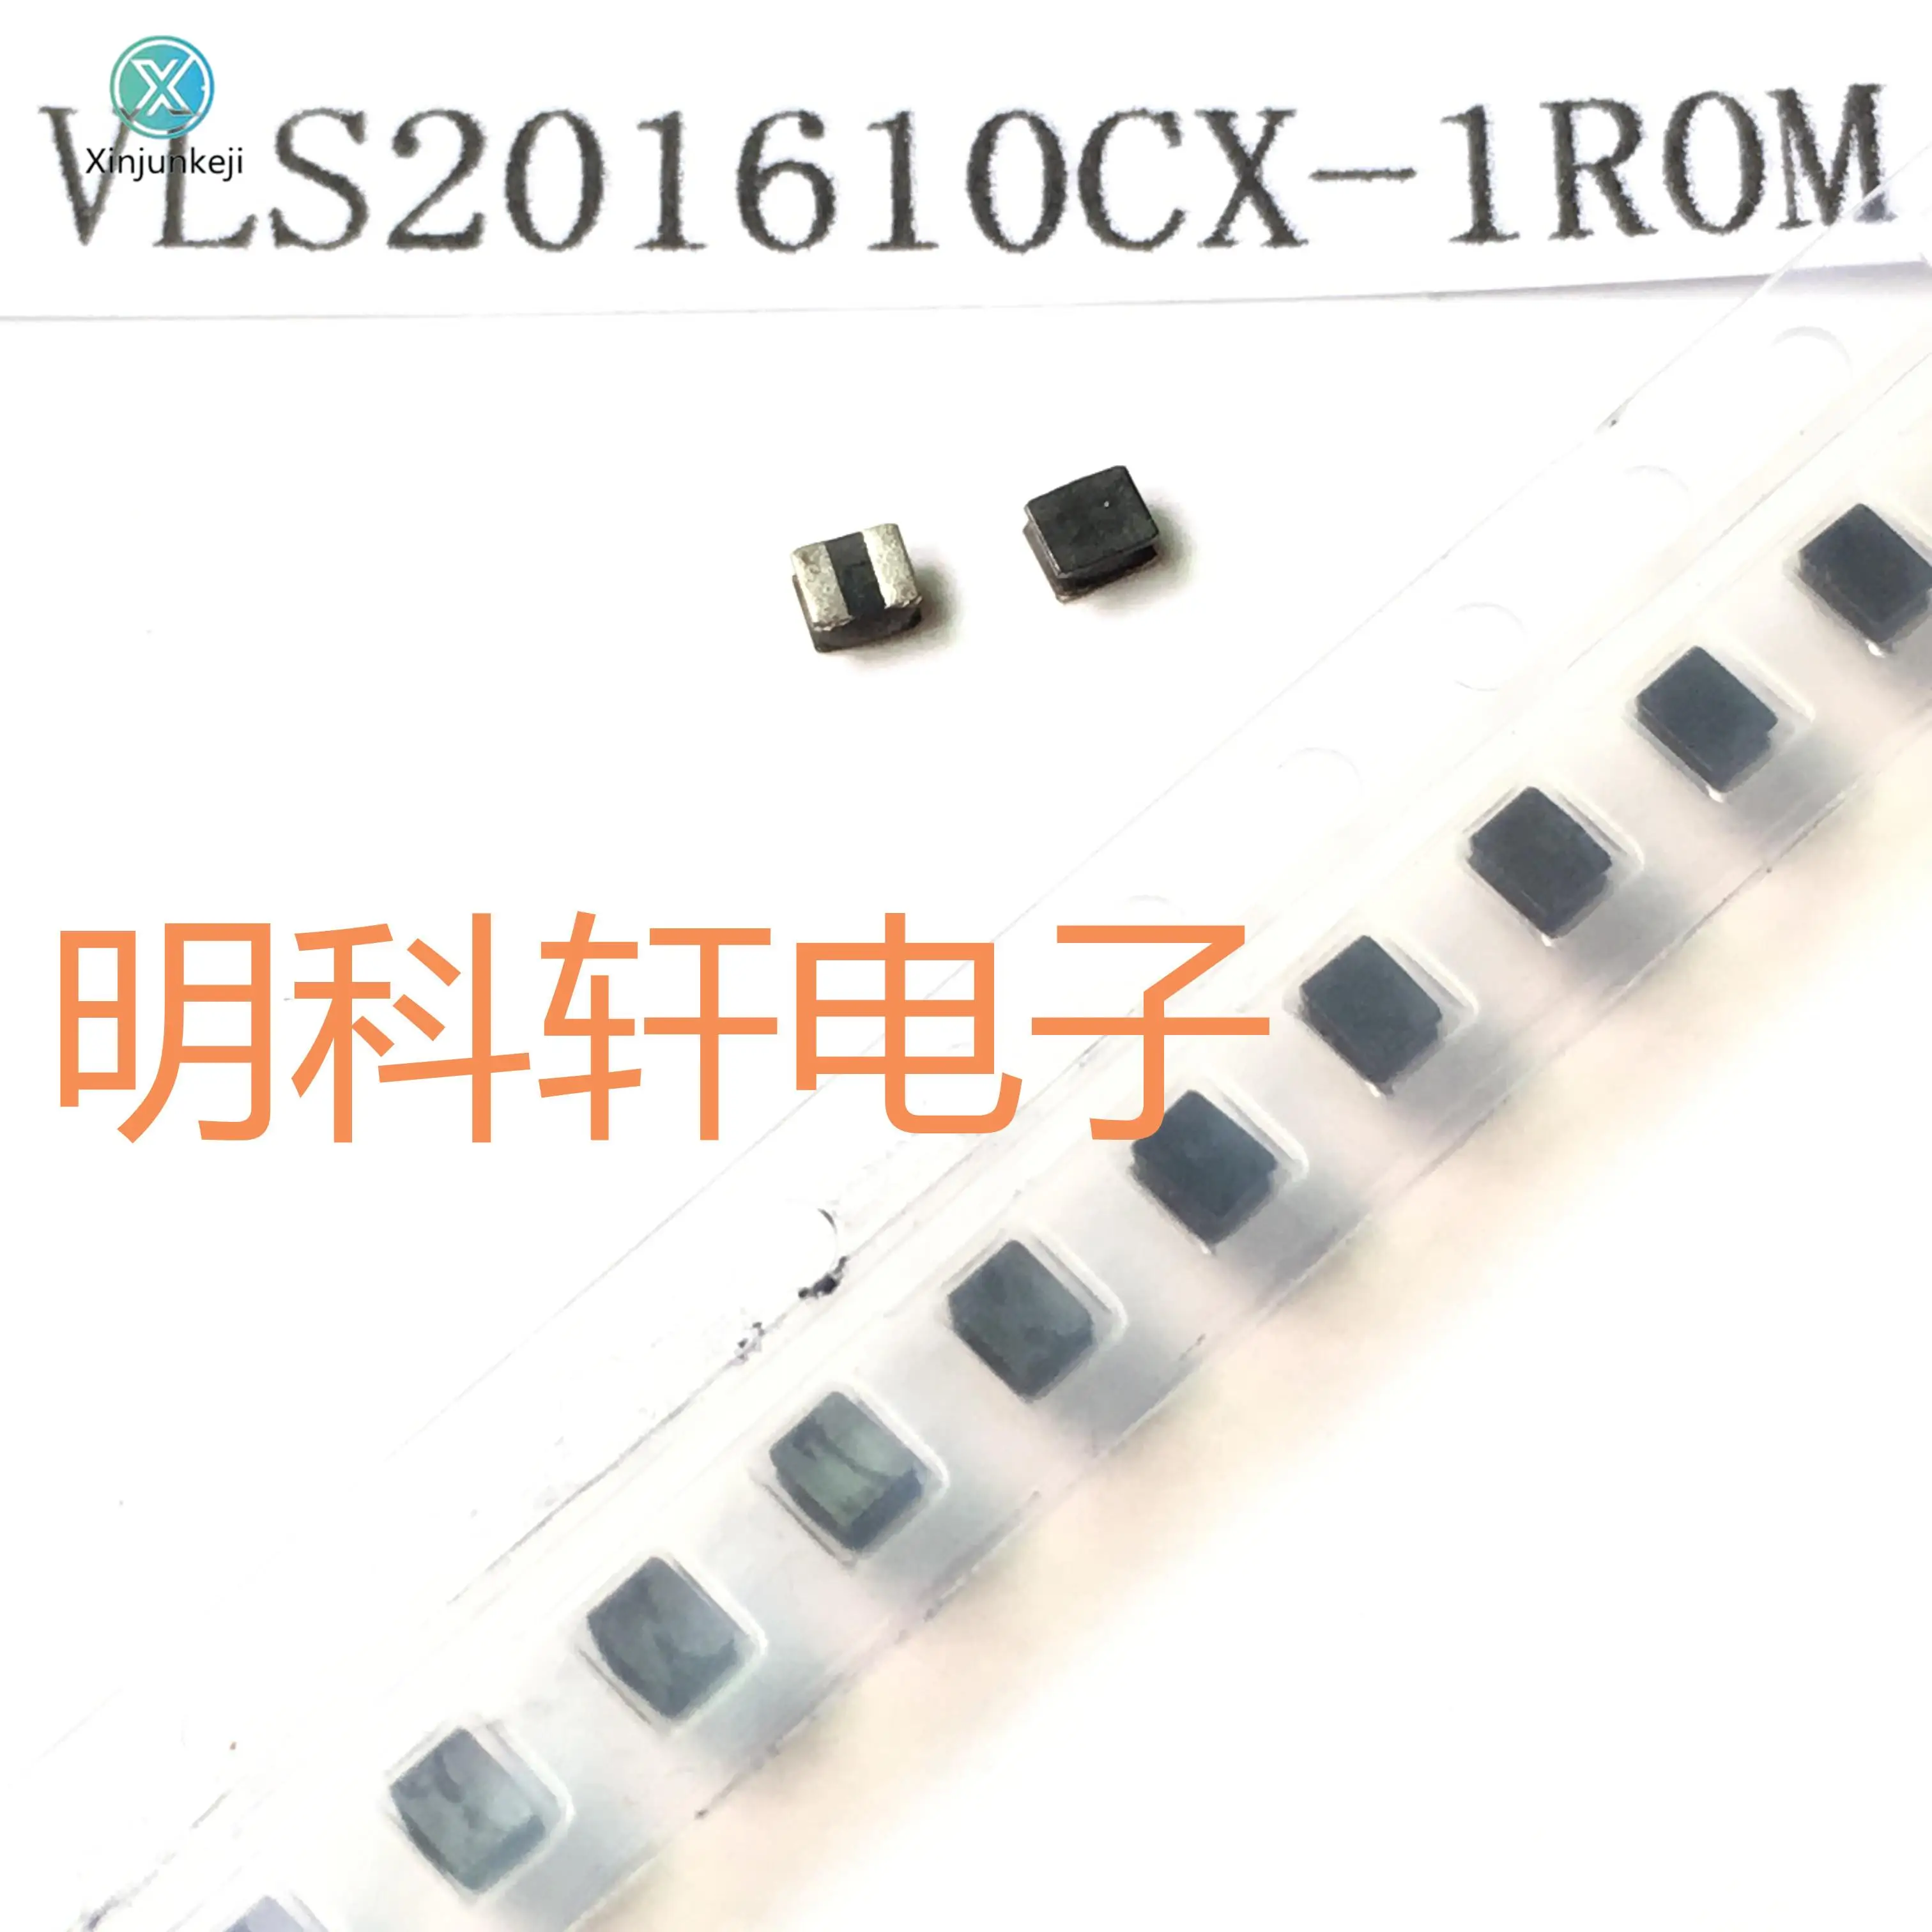 

30pcs orginal new VLS201610CX-1R0M SMD power inductor 1UH 0806 2.0*1.6*1.0